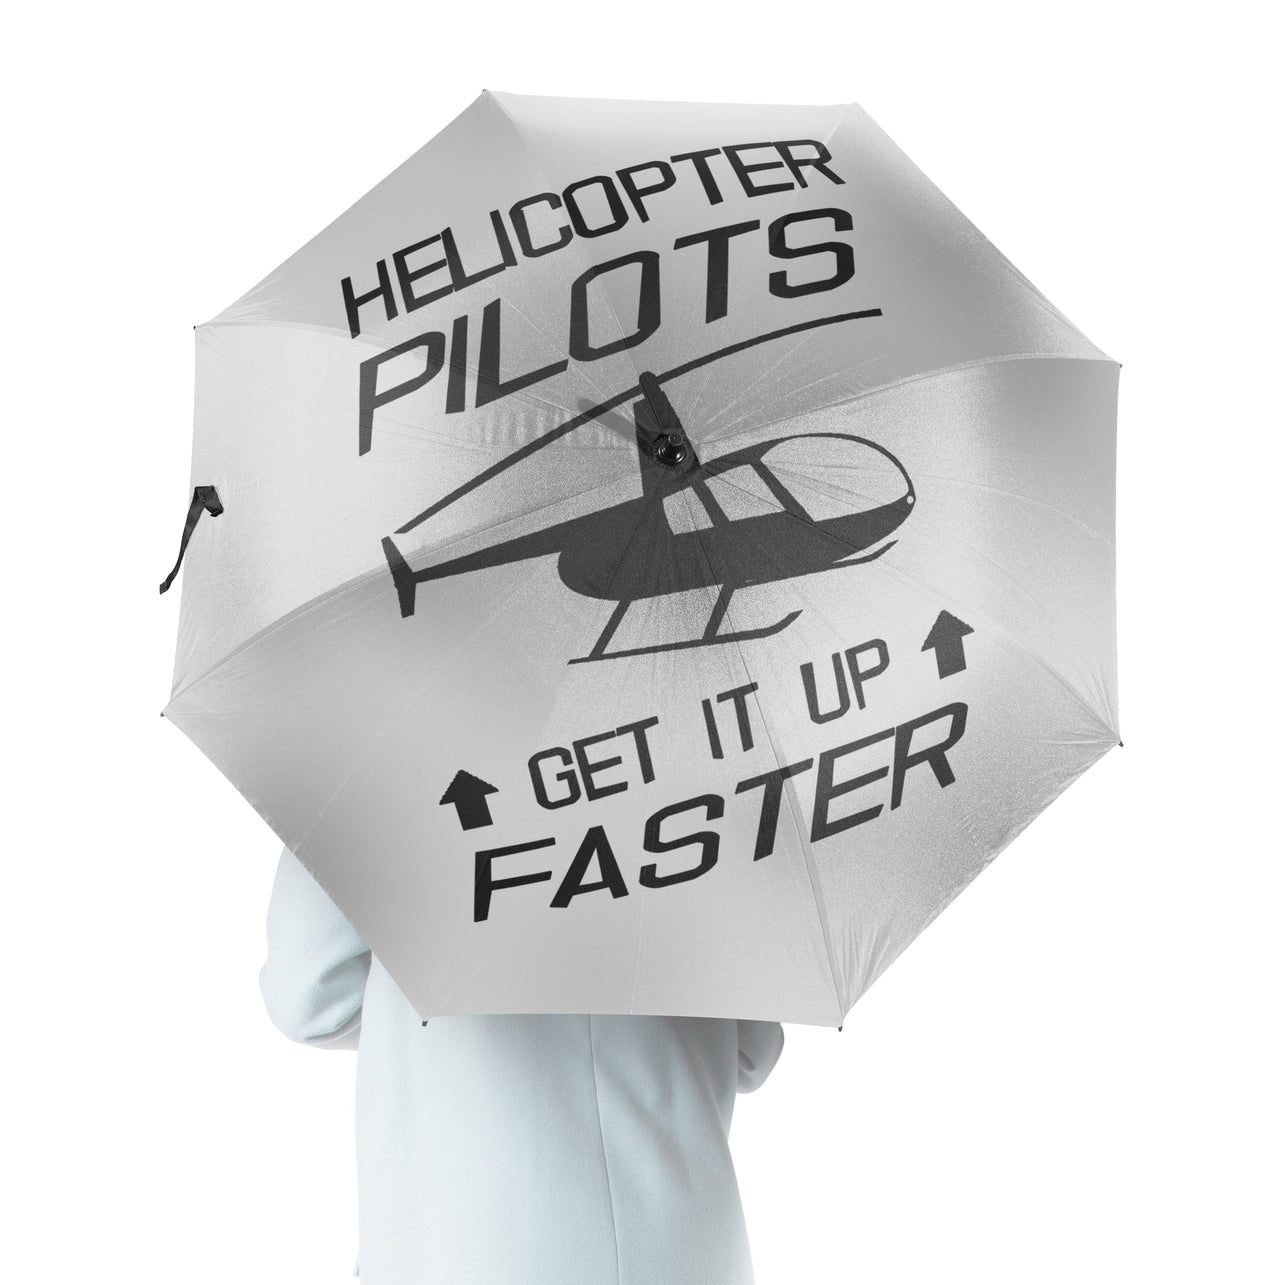 Helicopter Pilots Get It Up Faster Designed Umbrella